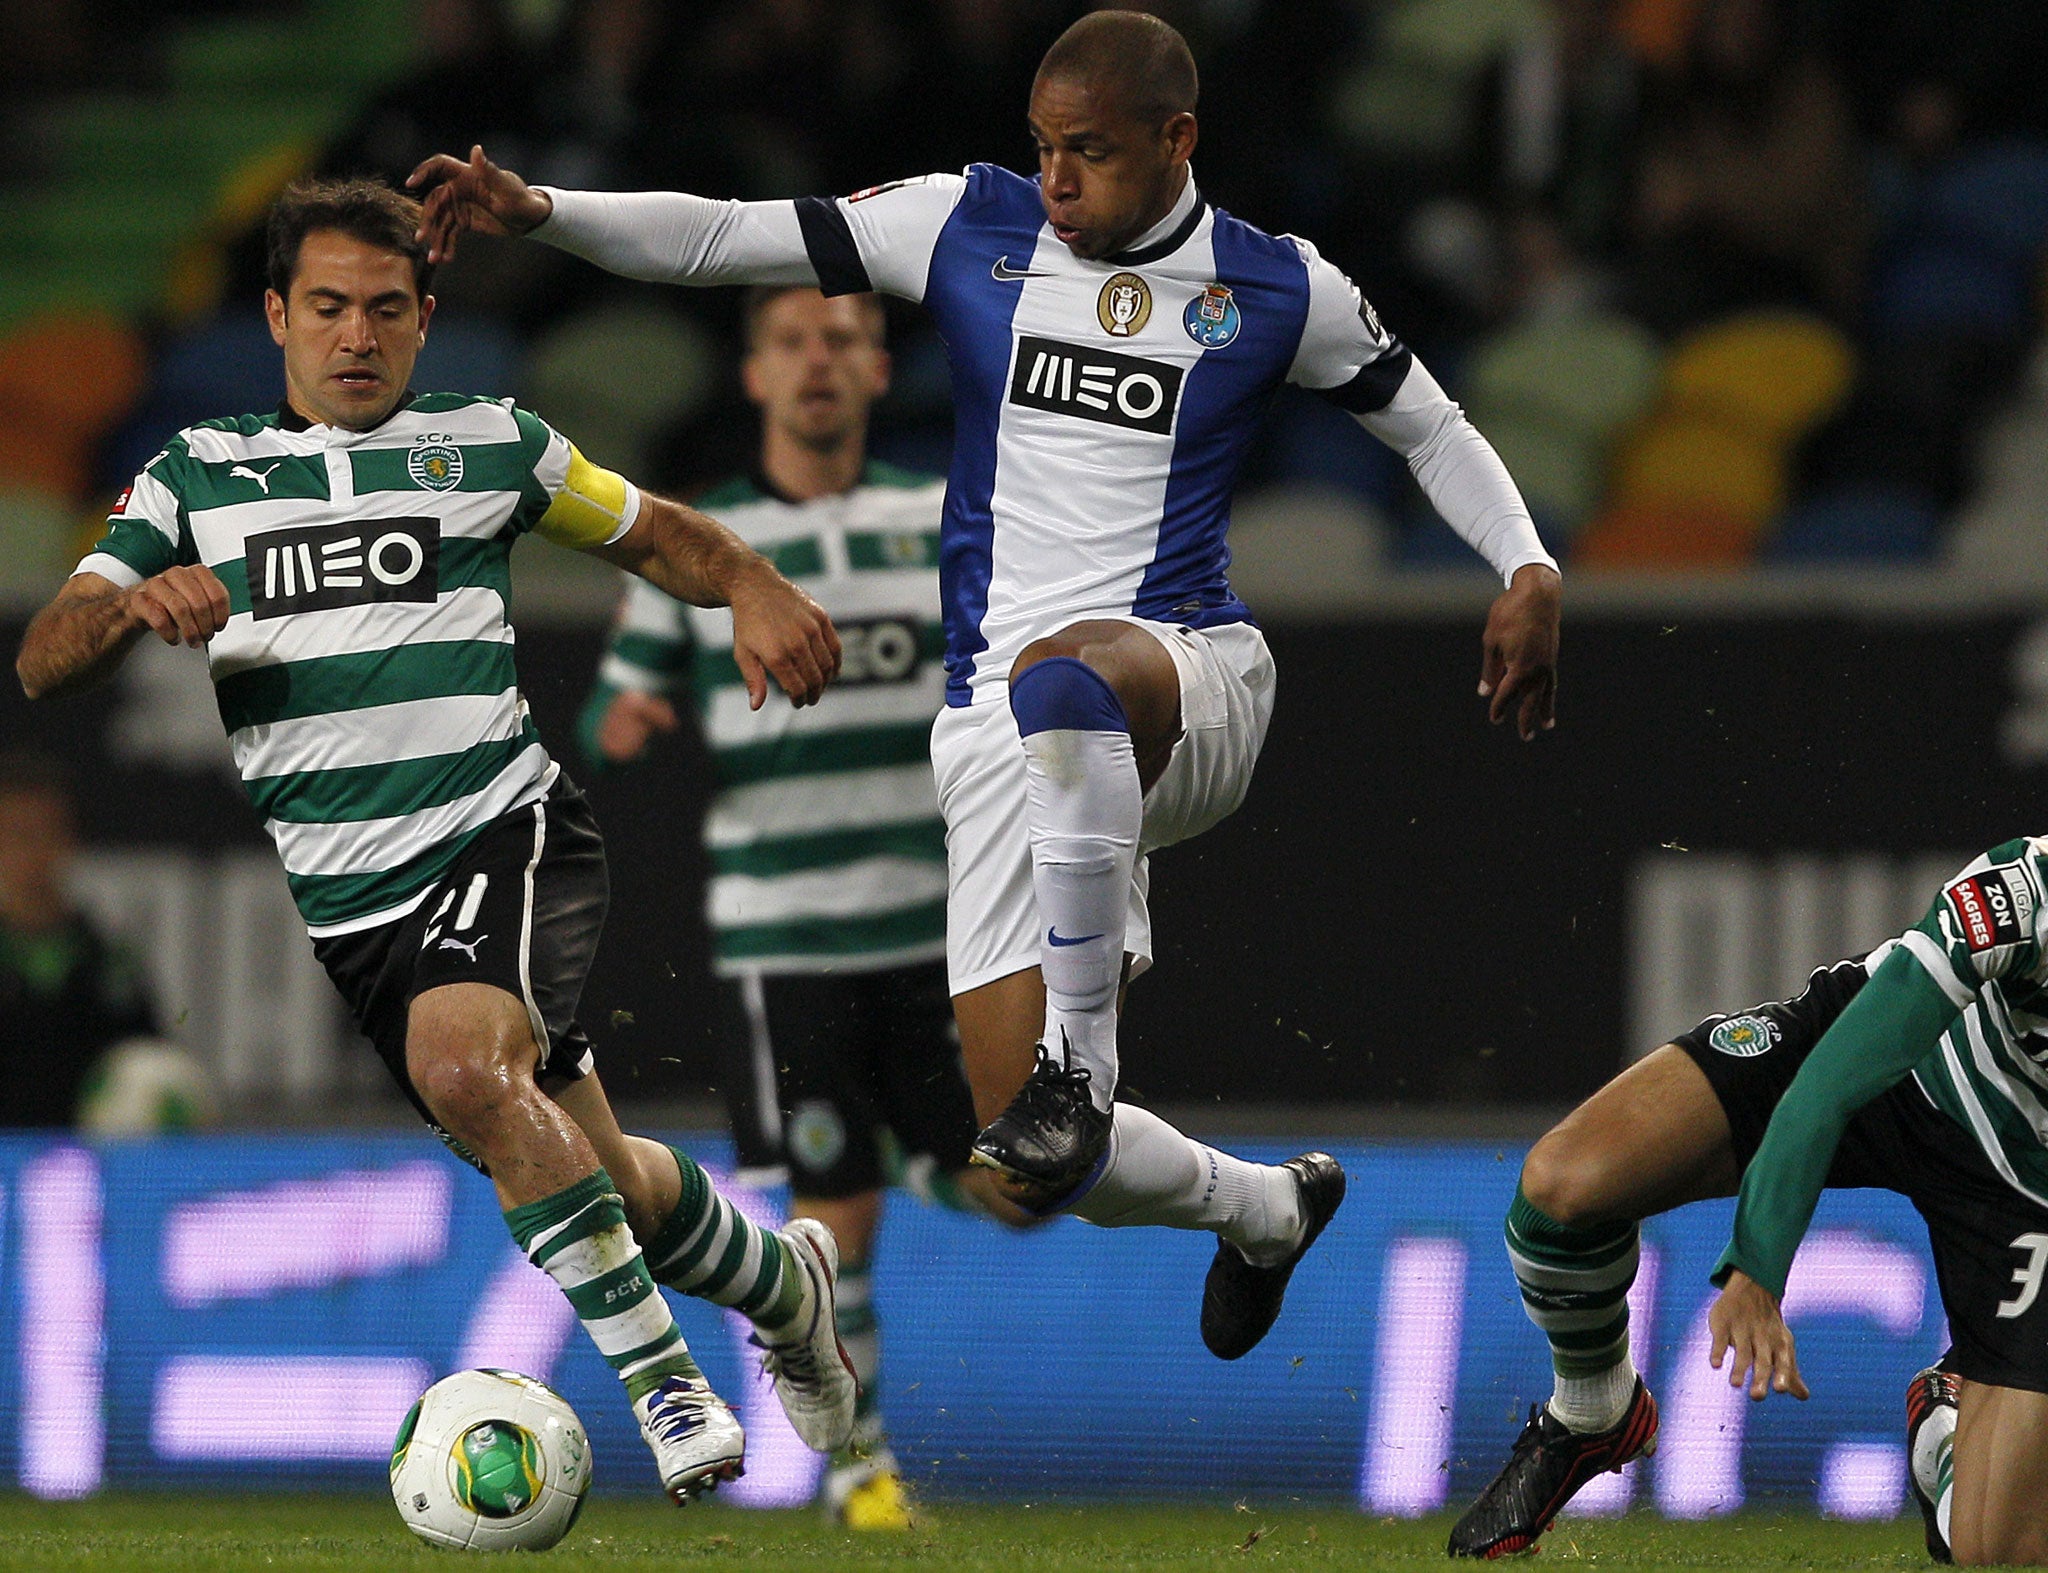 Everton-bound? Porto's Brazilian midfielder Fernando